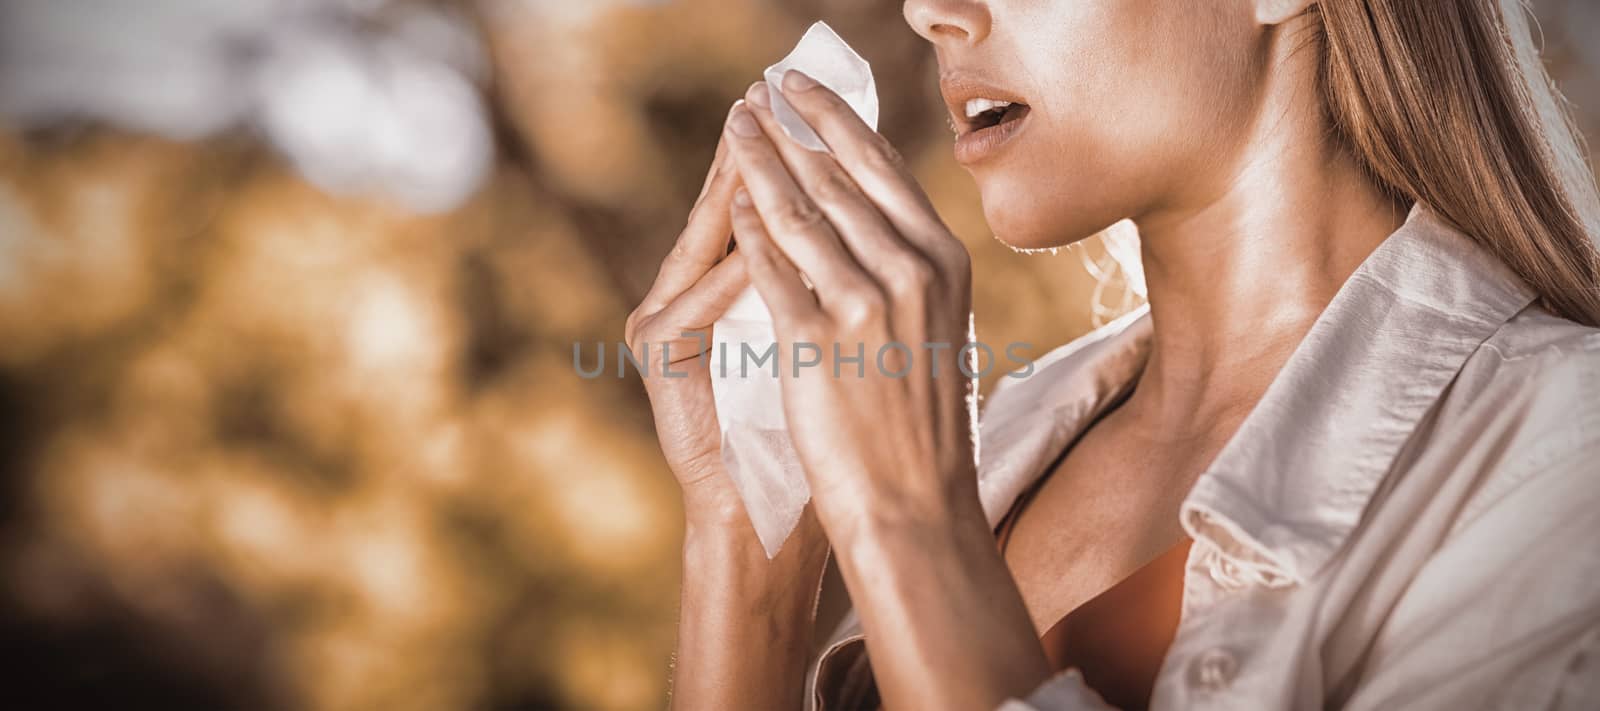 Beautiful woman using tissue while sneezing by Wavebreakmedia